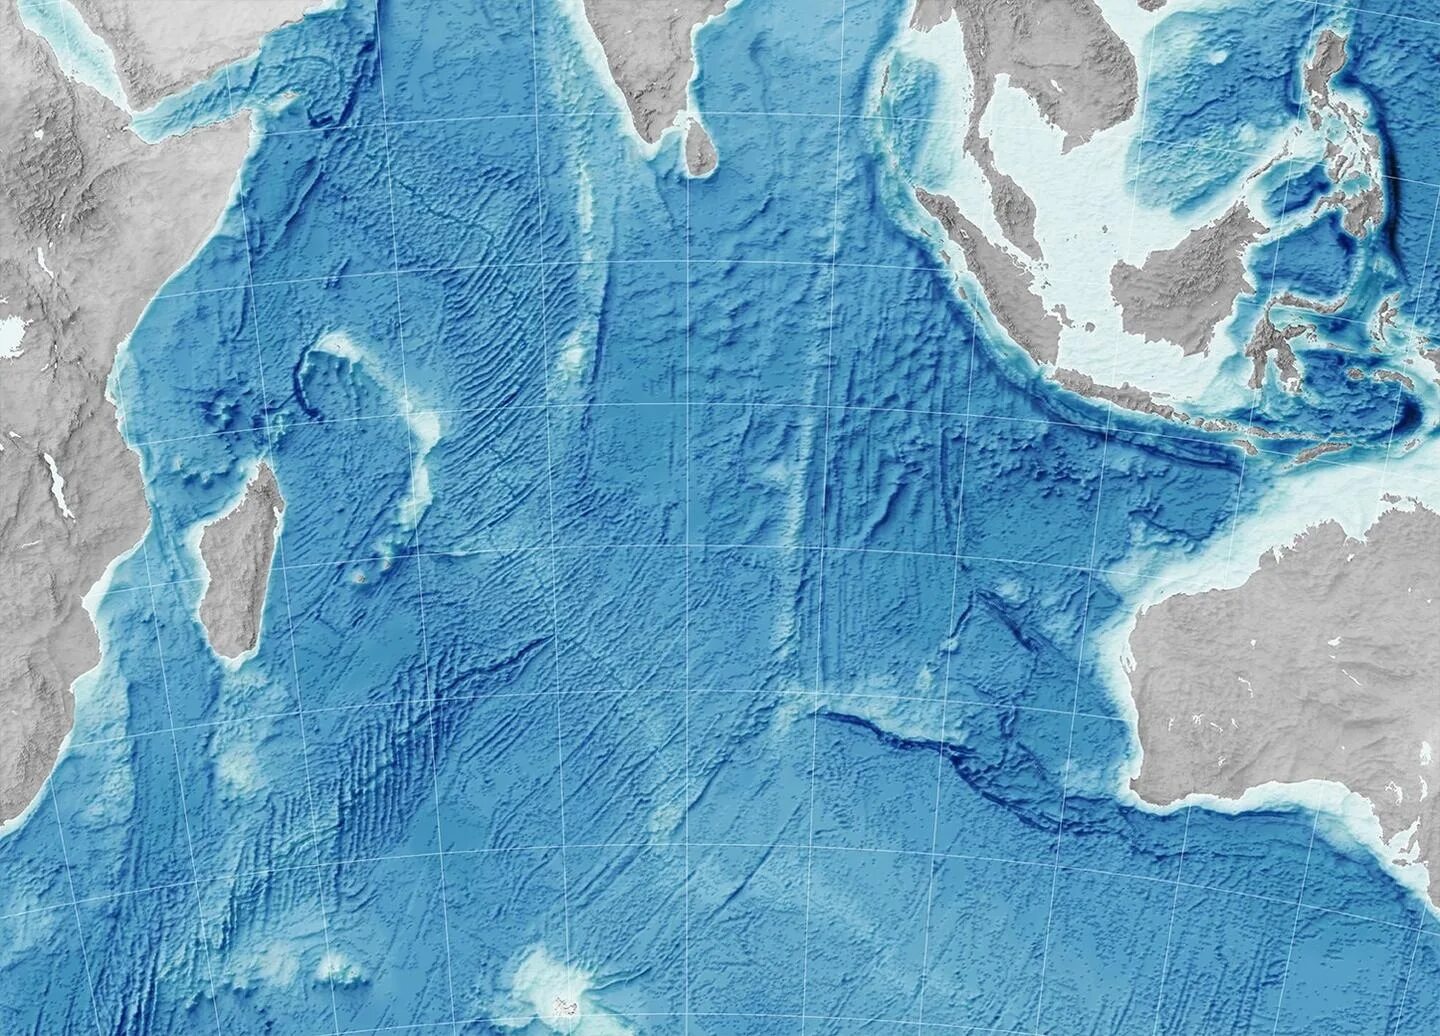 Равнины дна океана. Рельеф дна Тихого океана. Индийский океан рельеф дна карта дна. Рельеф индийского океана. Индийский океан рельеф дна океана.